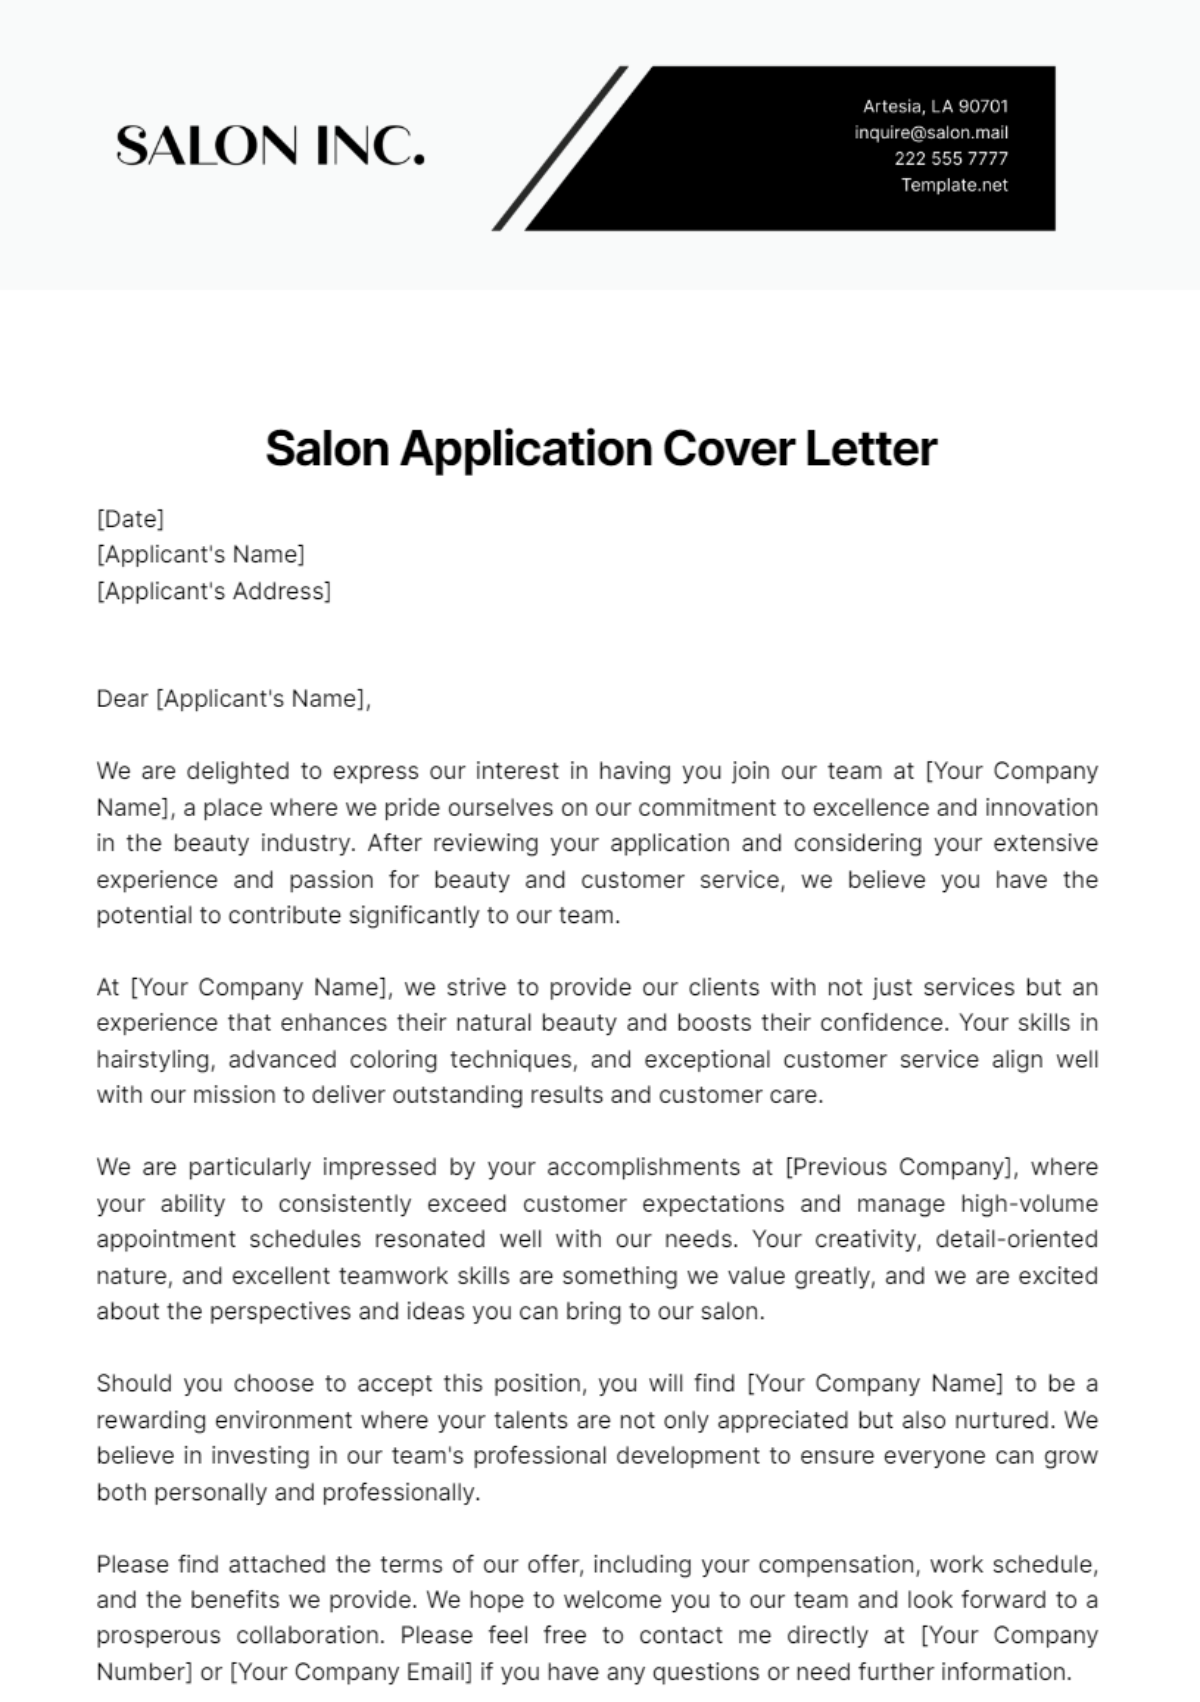 Salon Application Cover Letter Template